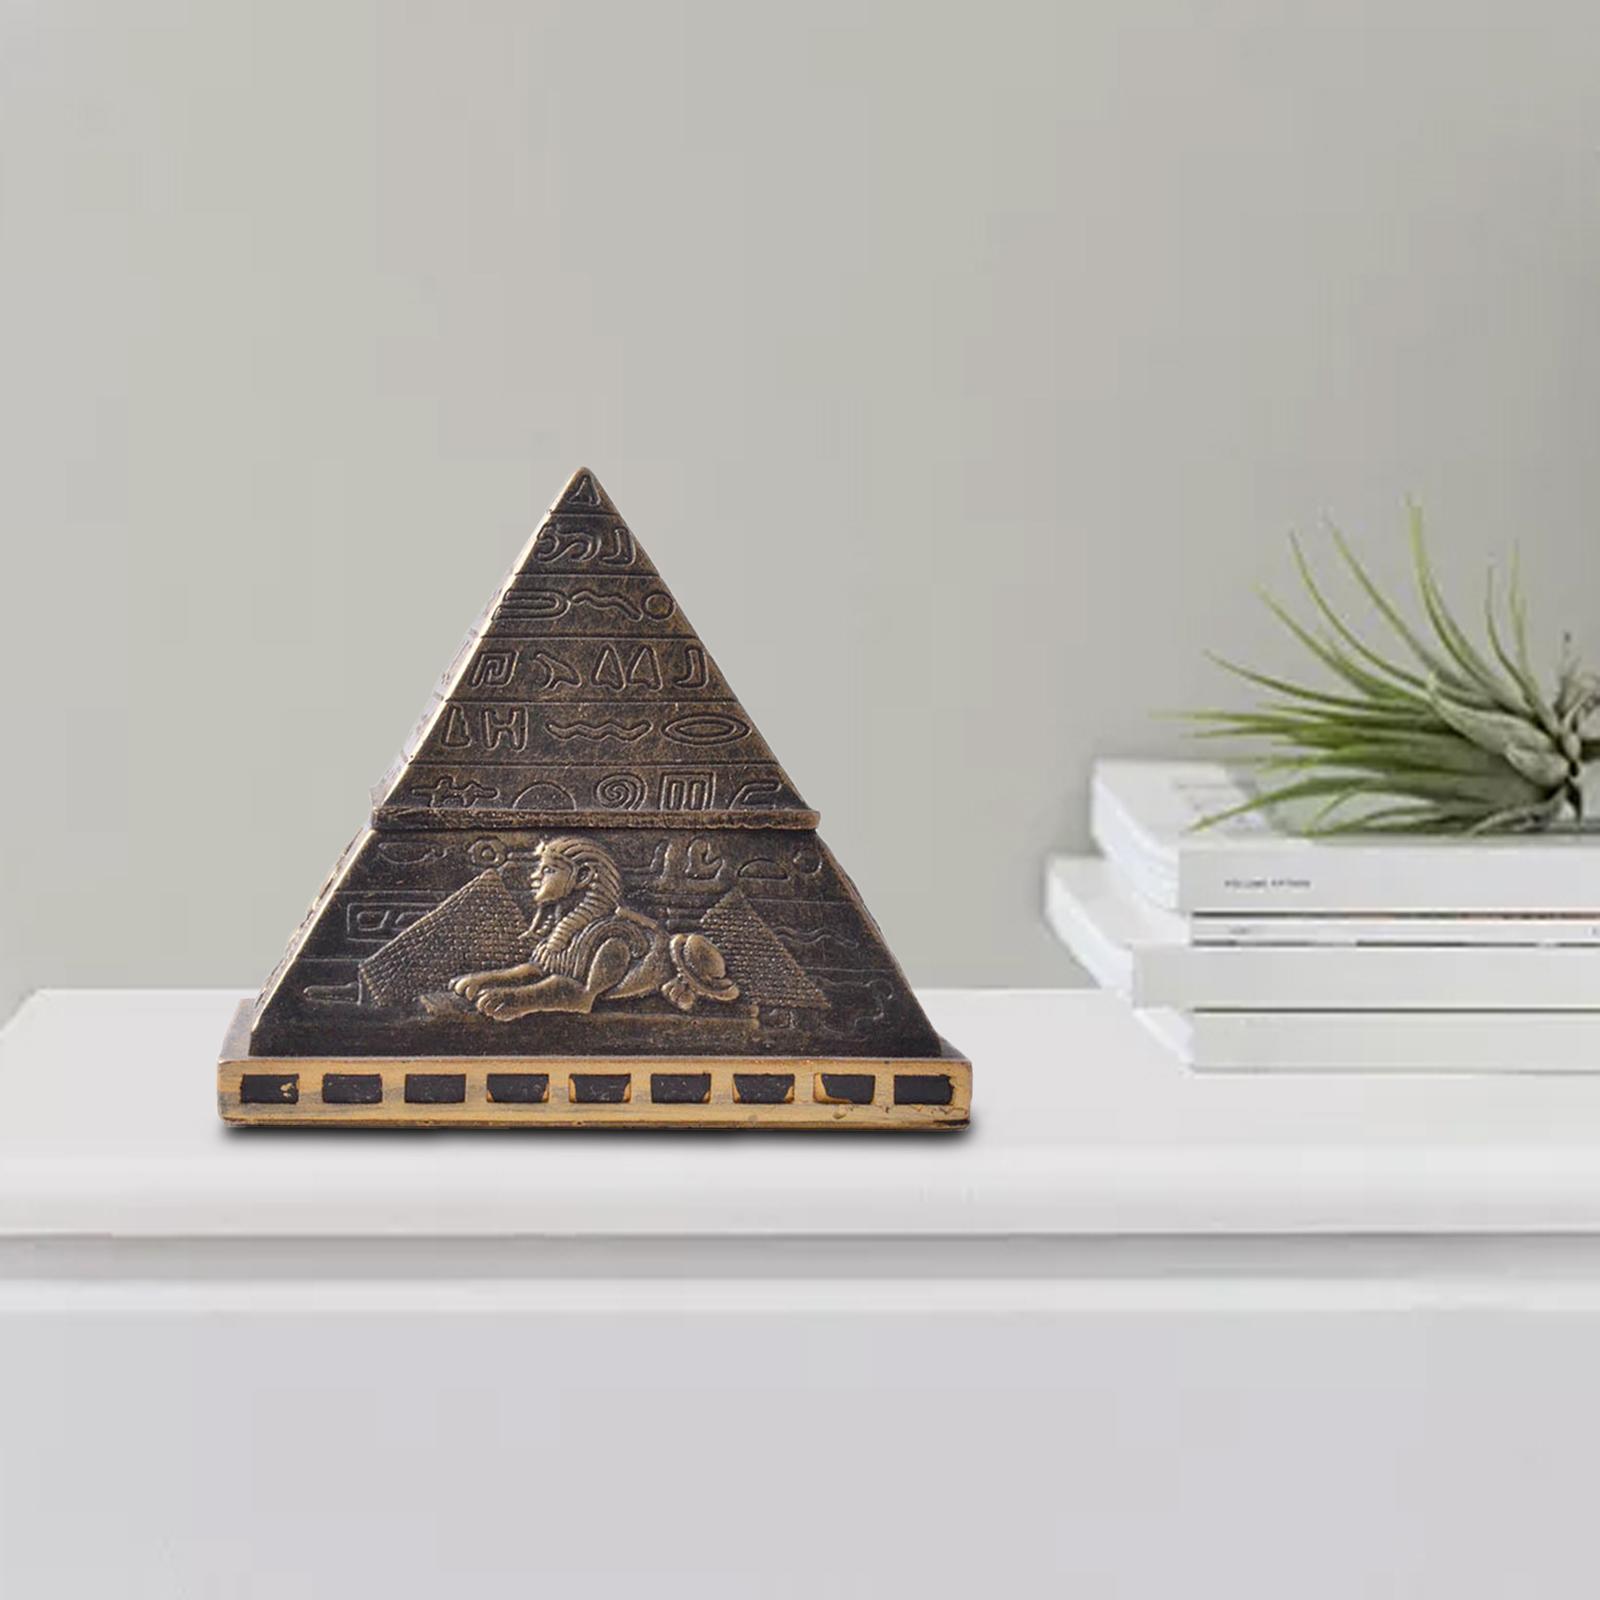 Egypt Pyramid Sculpture Home Office Storage Jewelry Box Decoration